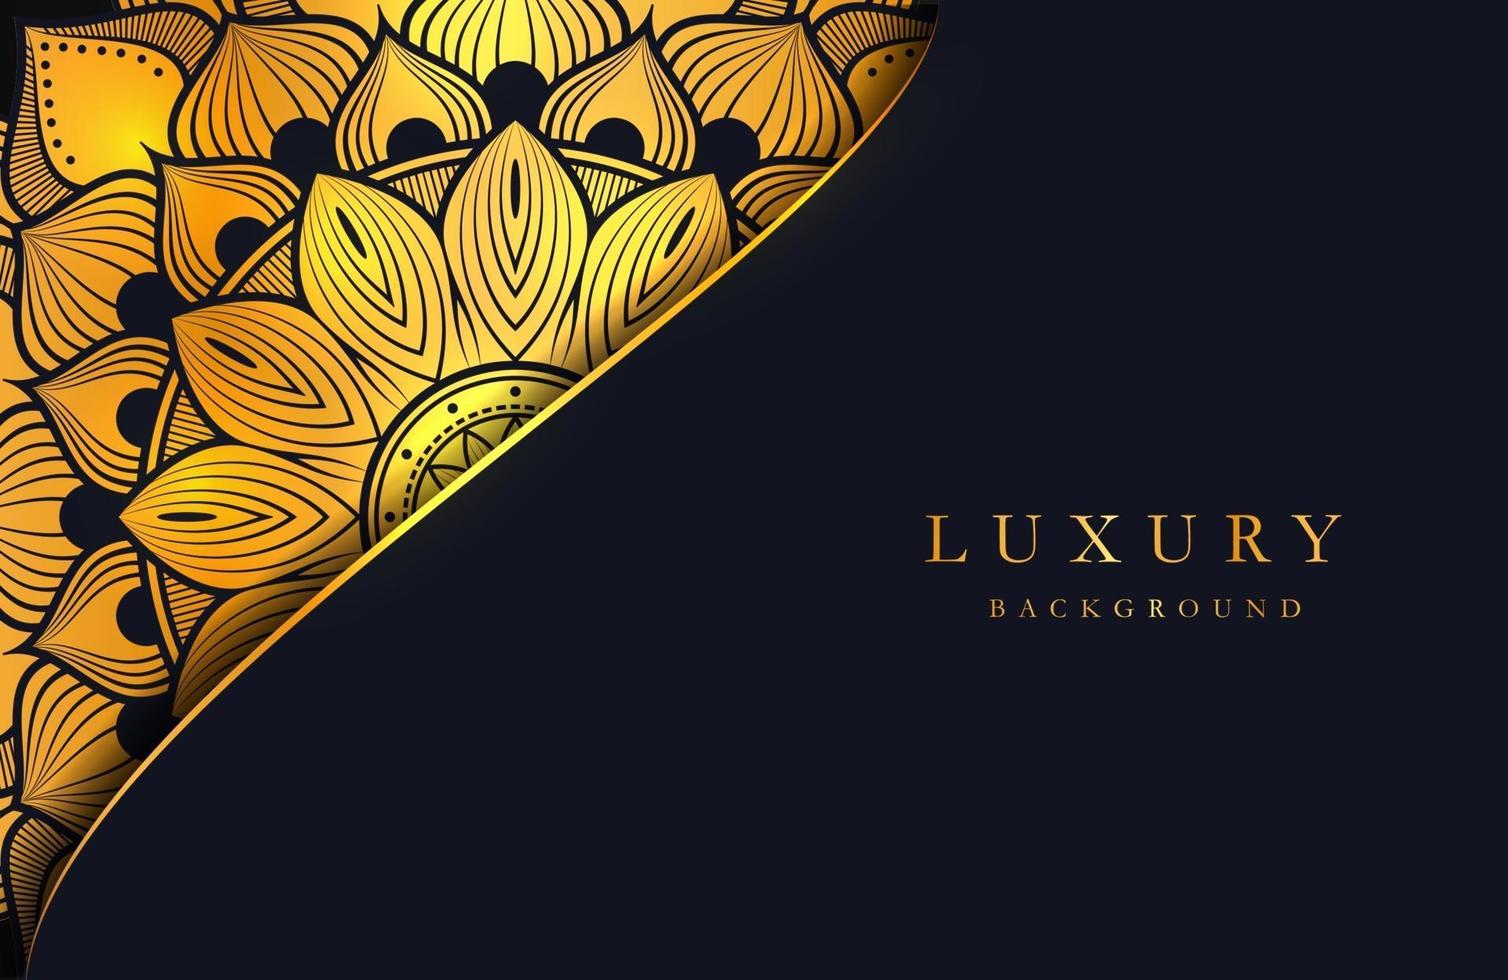 Luxury background with gold islamic arabesque mandala ornament on dark surface vector